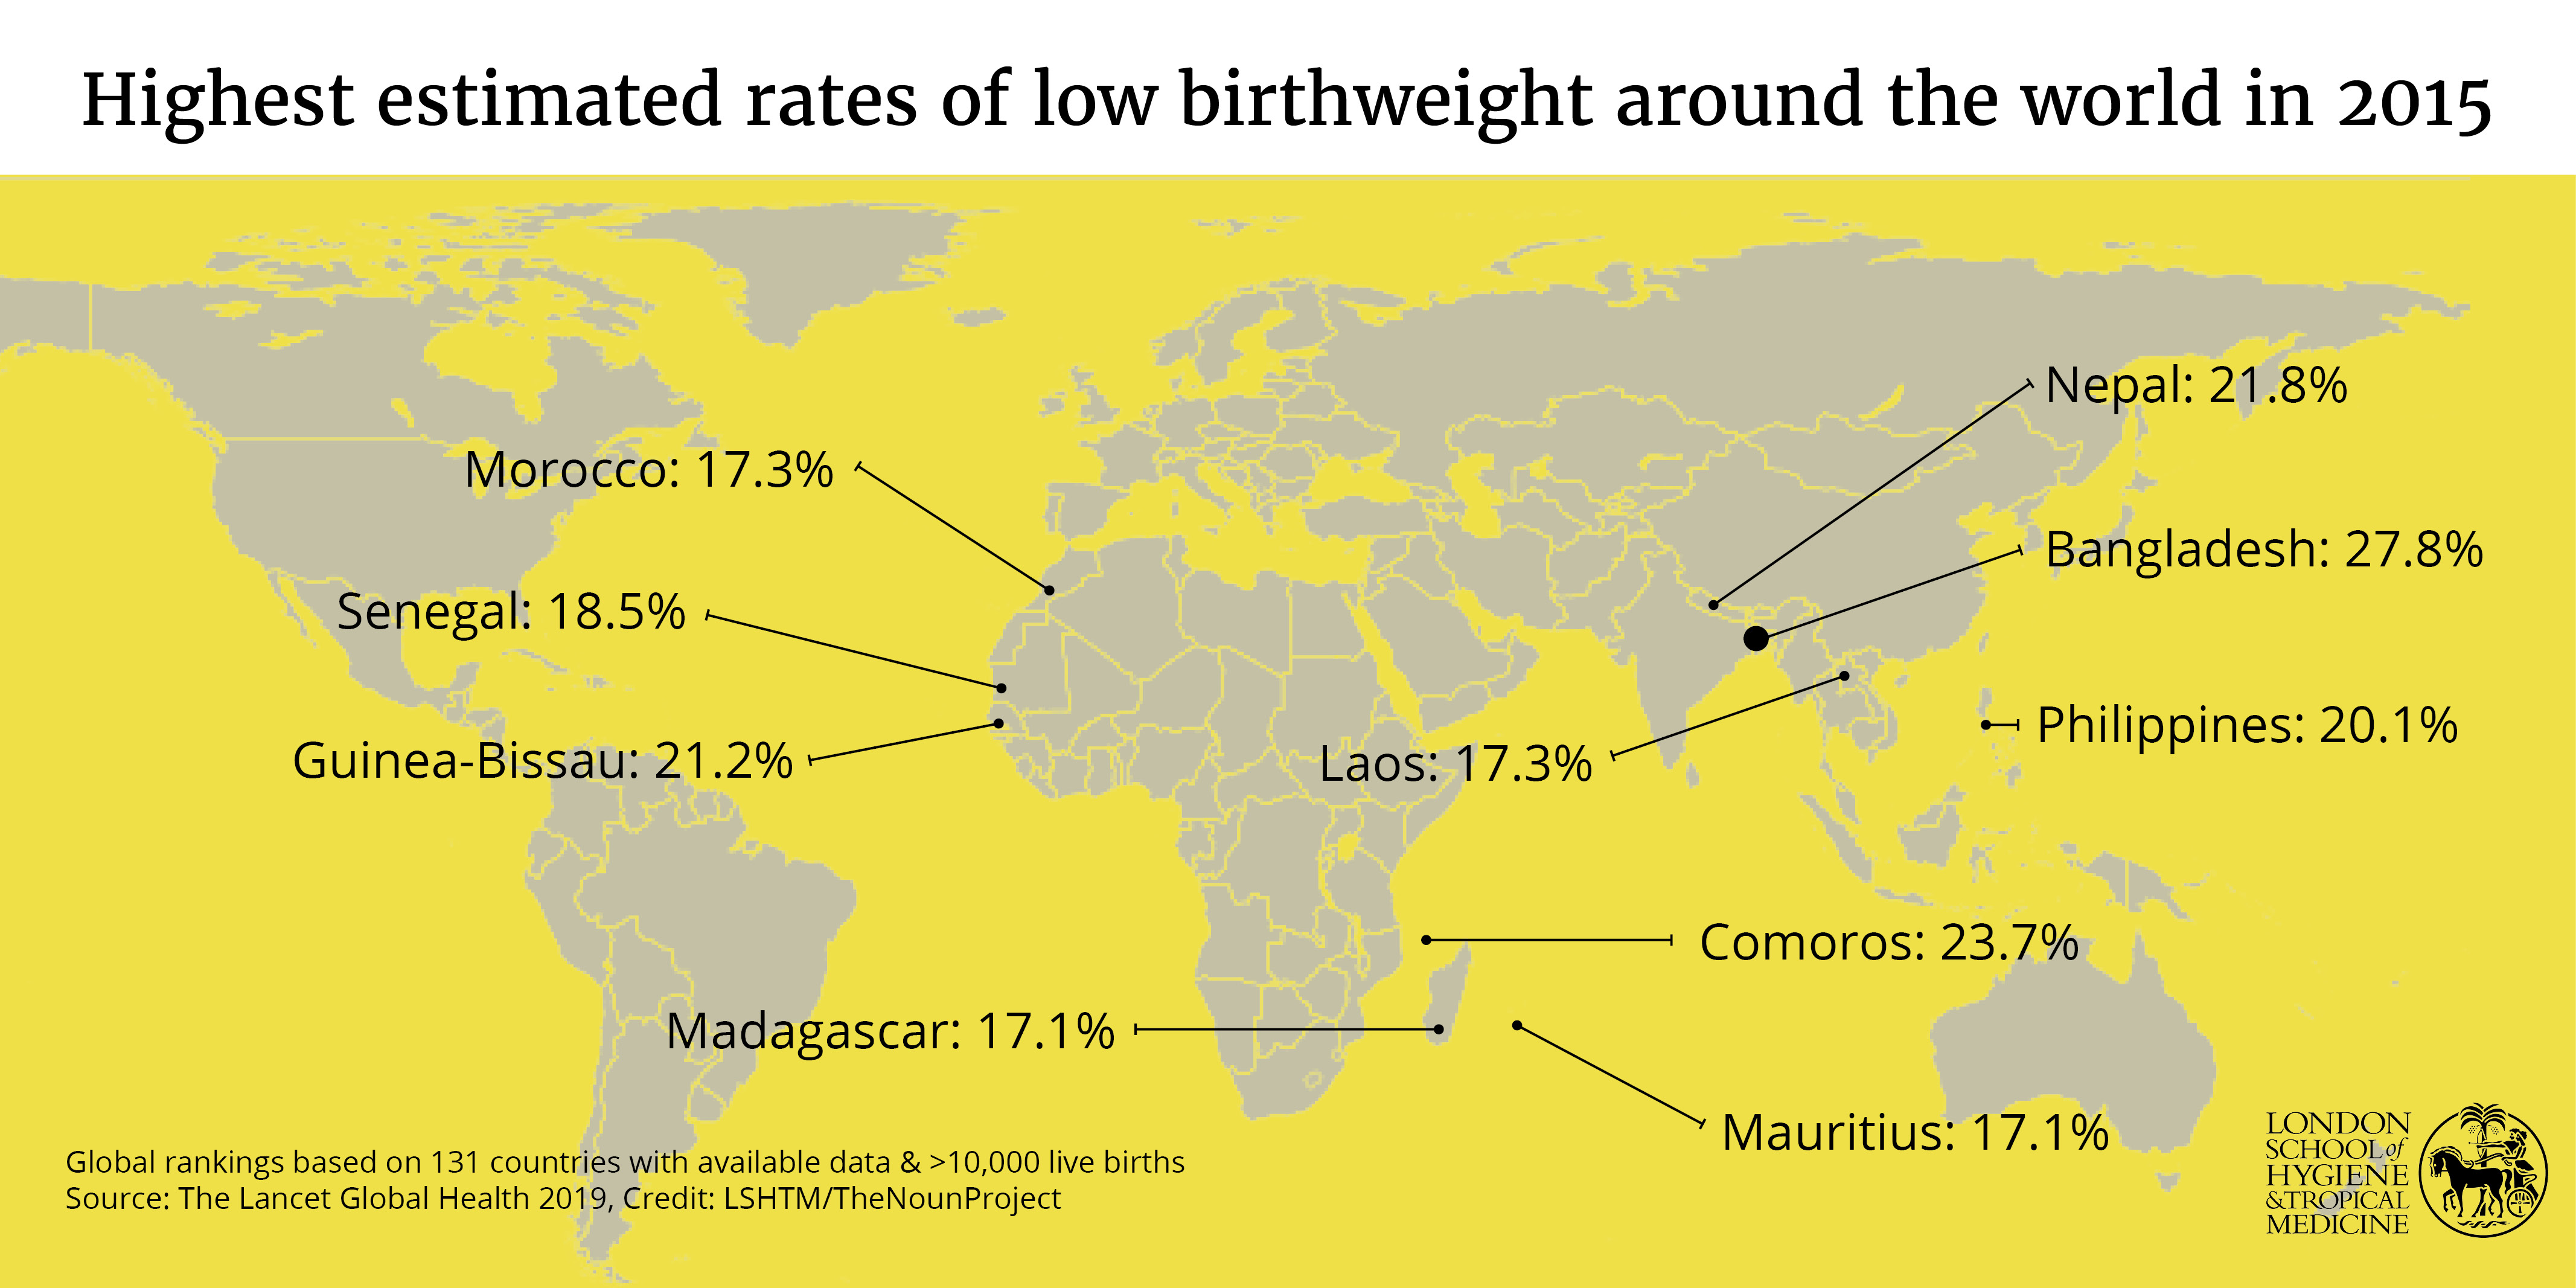 Highest rates of low birthweight around the world in 2015